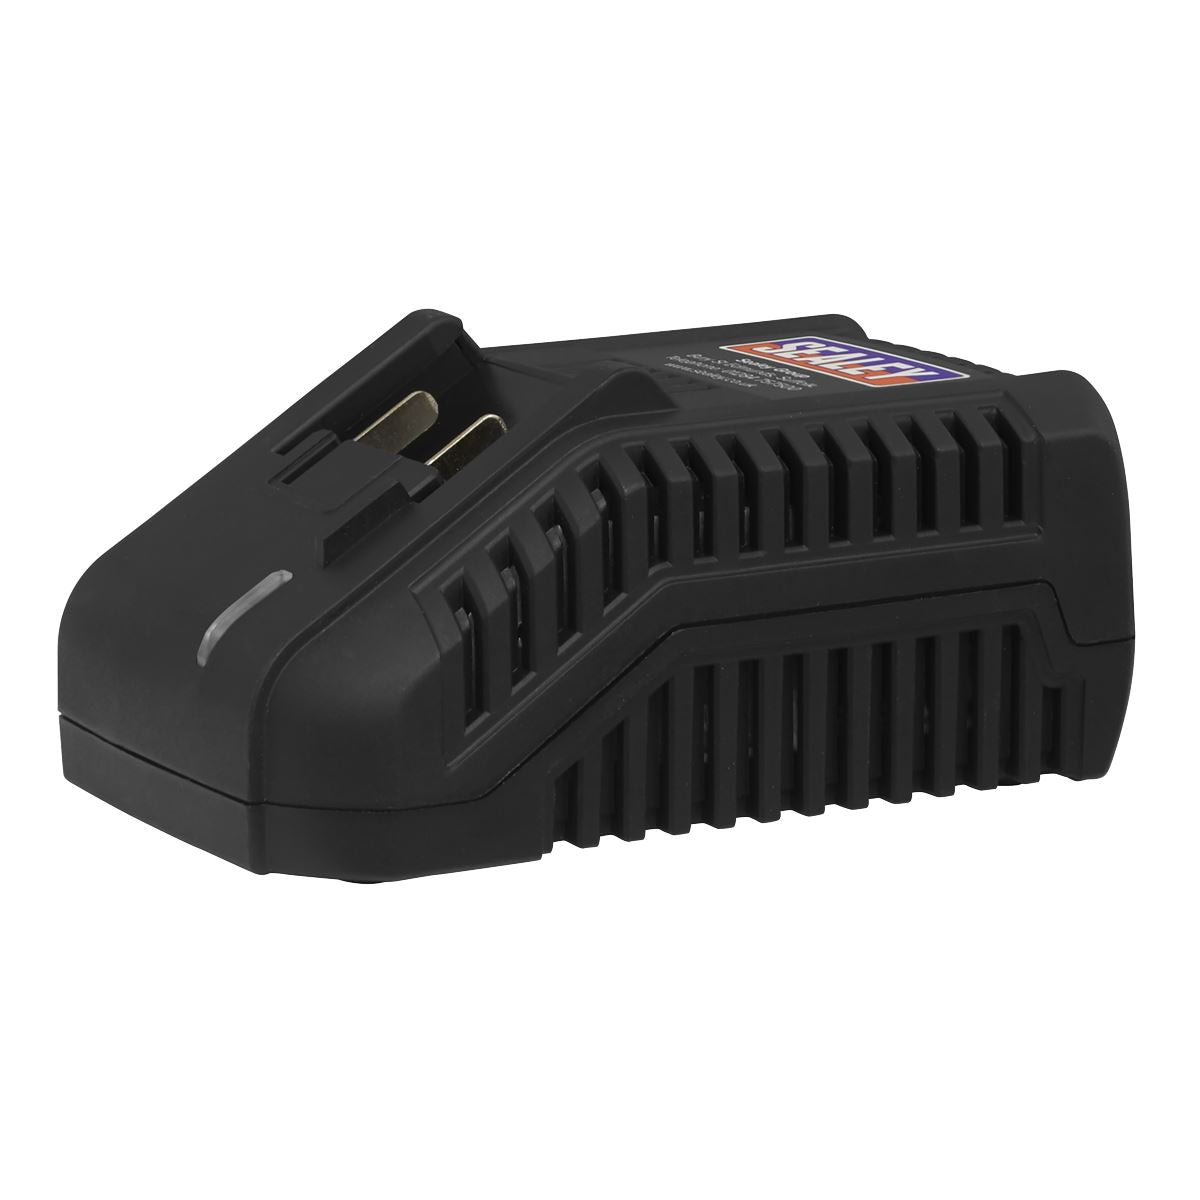 Sealey Handheld Ash Vacuum Cleaner 20V SV20 Series 15L Kit - 2 Batteries CP20VAVKIT